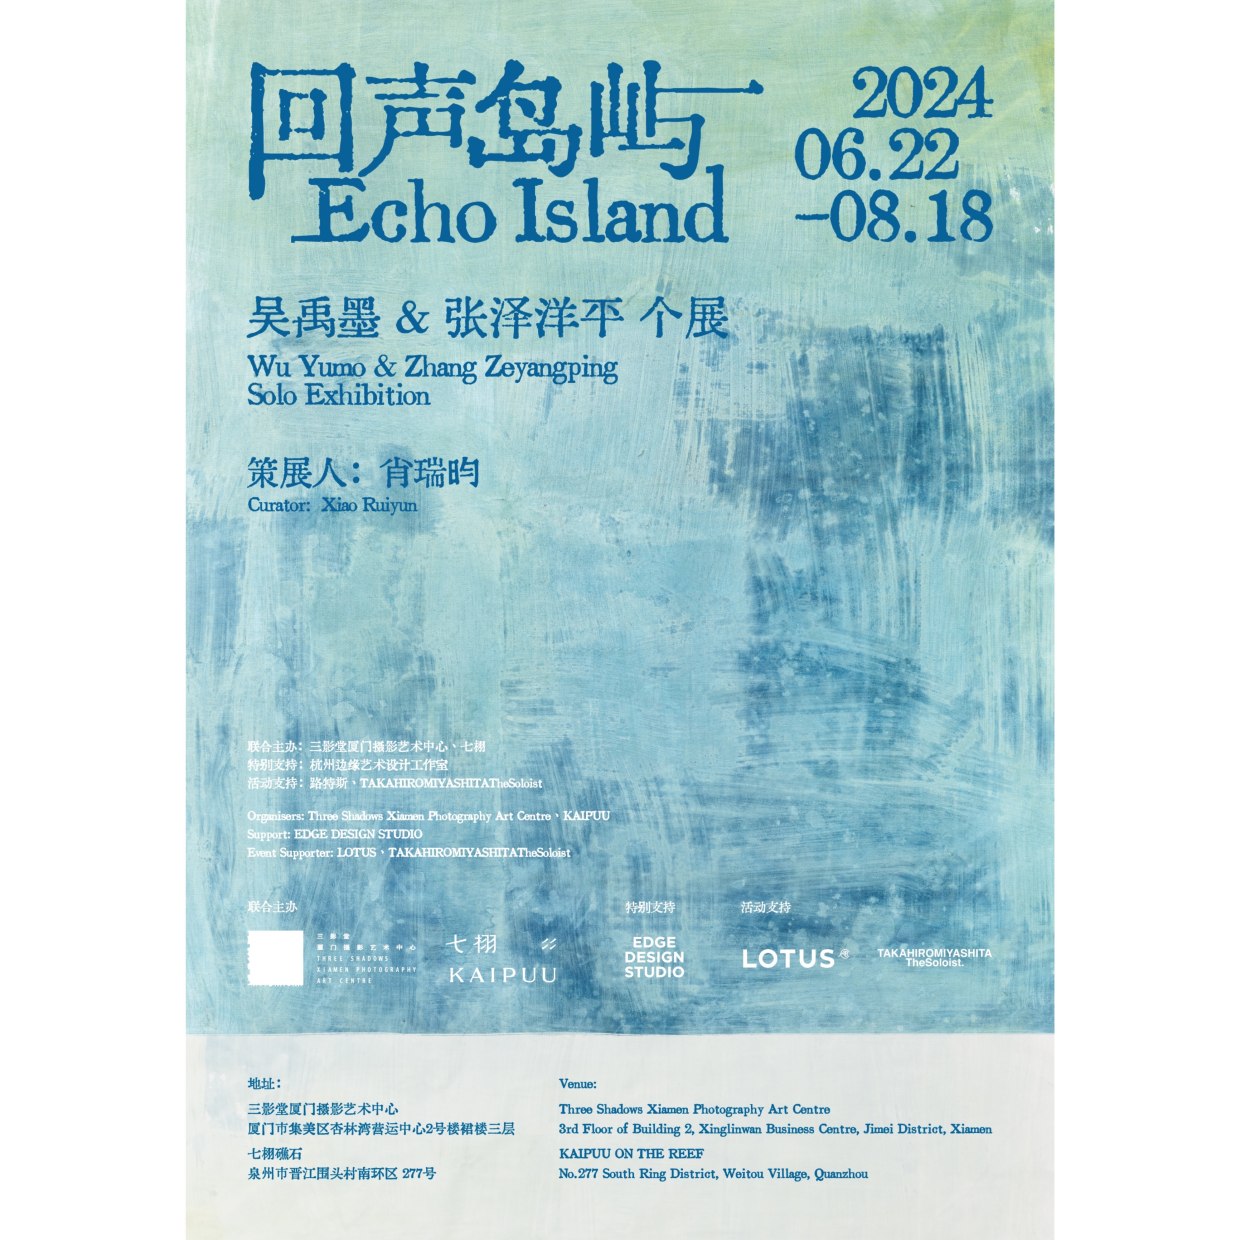 Wu Yumo & Zhang Zeyangping Solo Exhibition - Echo Island